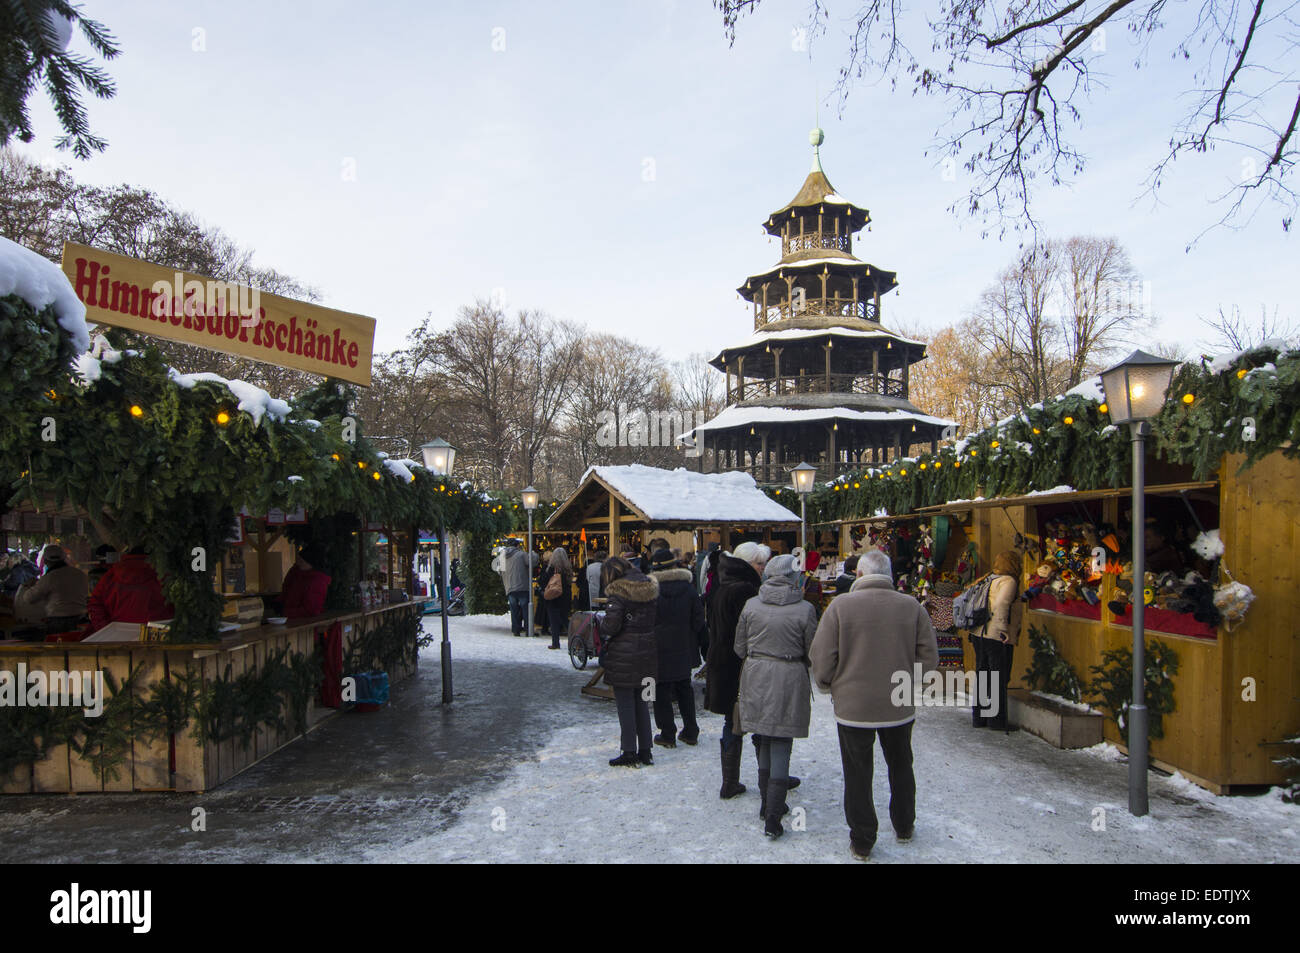 Weihnachtsmarkt im Englischen Garten, am Chinesischen Turm en München, Deutschlan, Oberbayern ,Mercado de Navidad en el Chino T Foto de stock